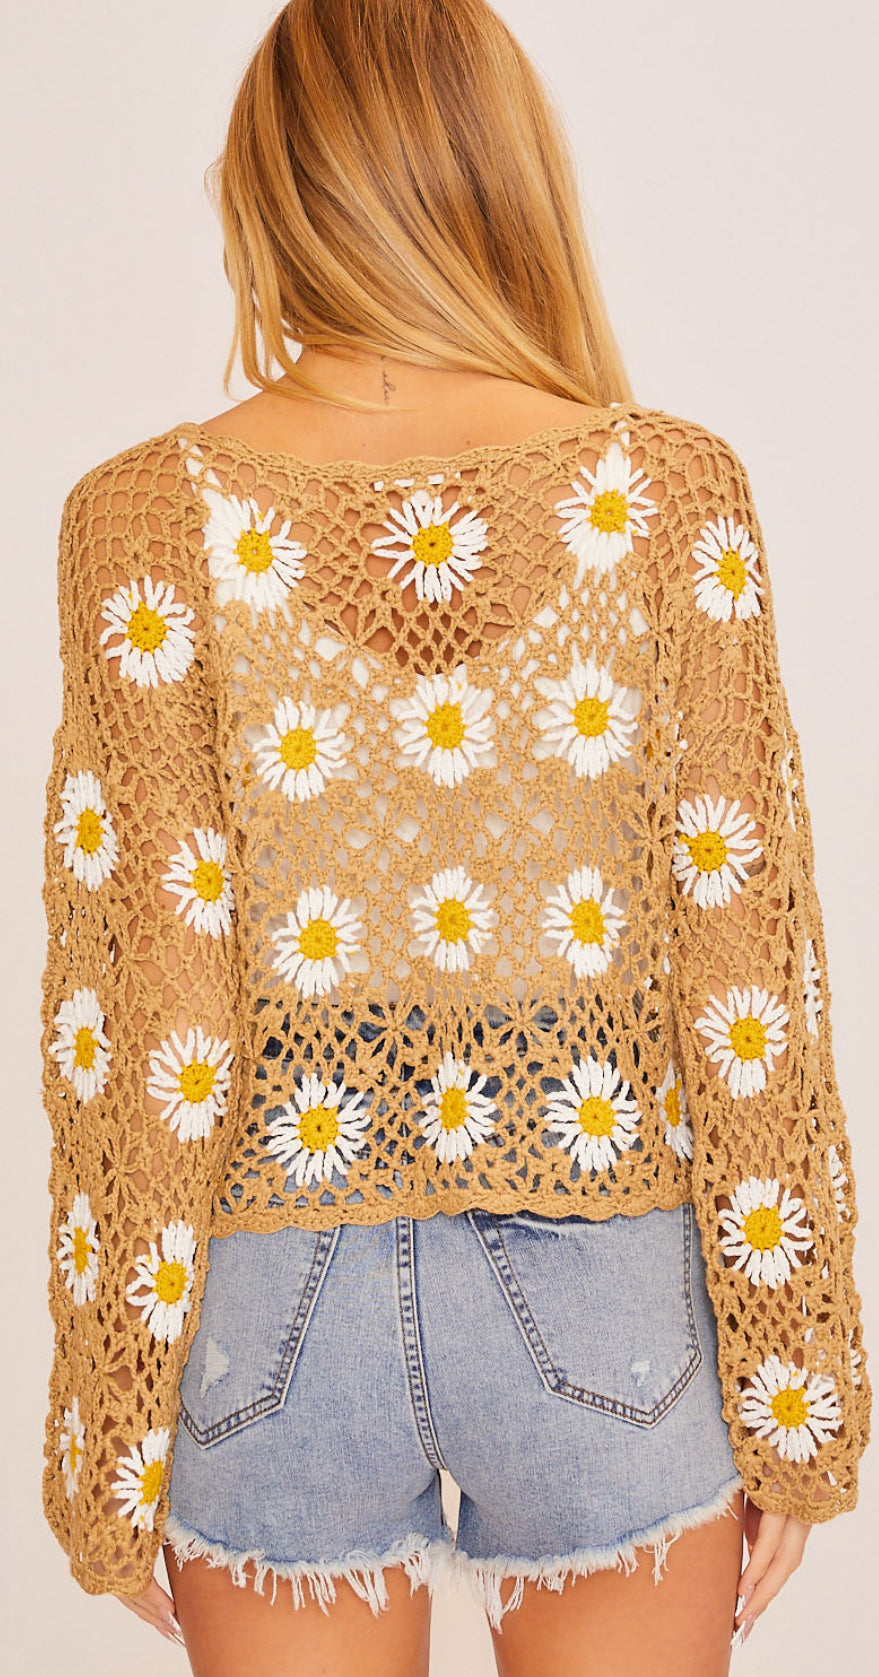 Crochet Knit Daisy Top